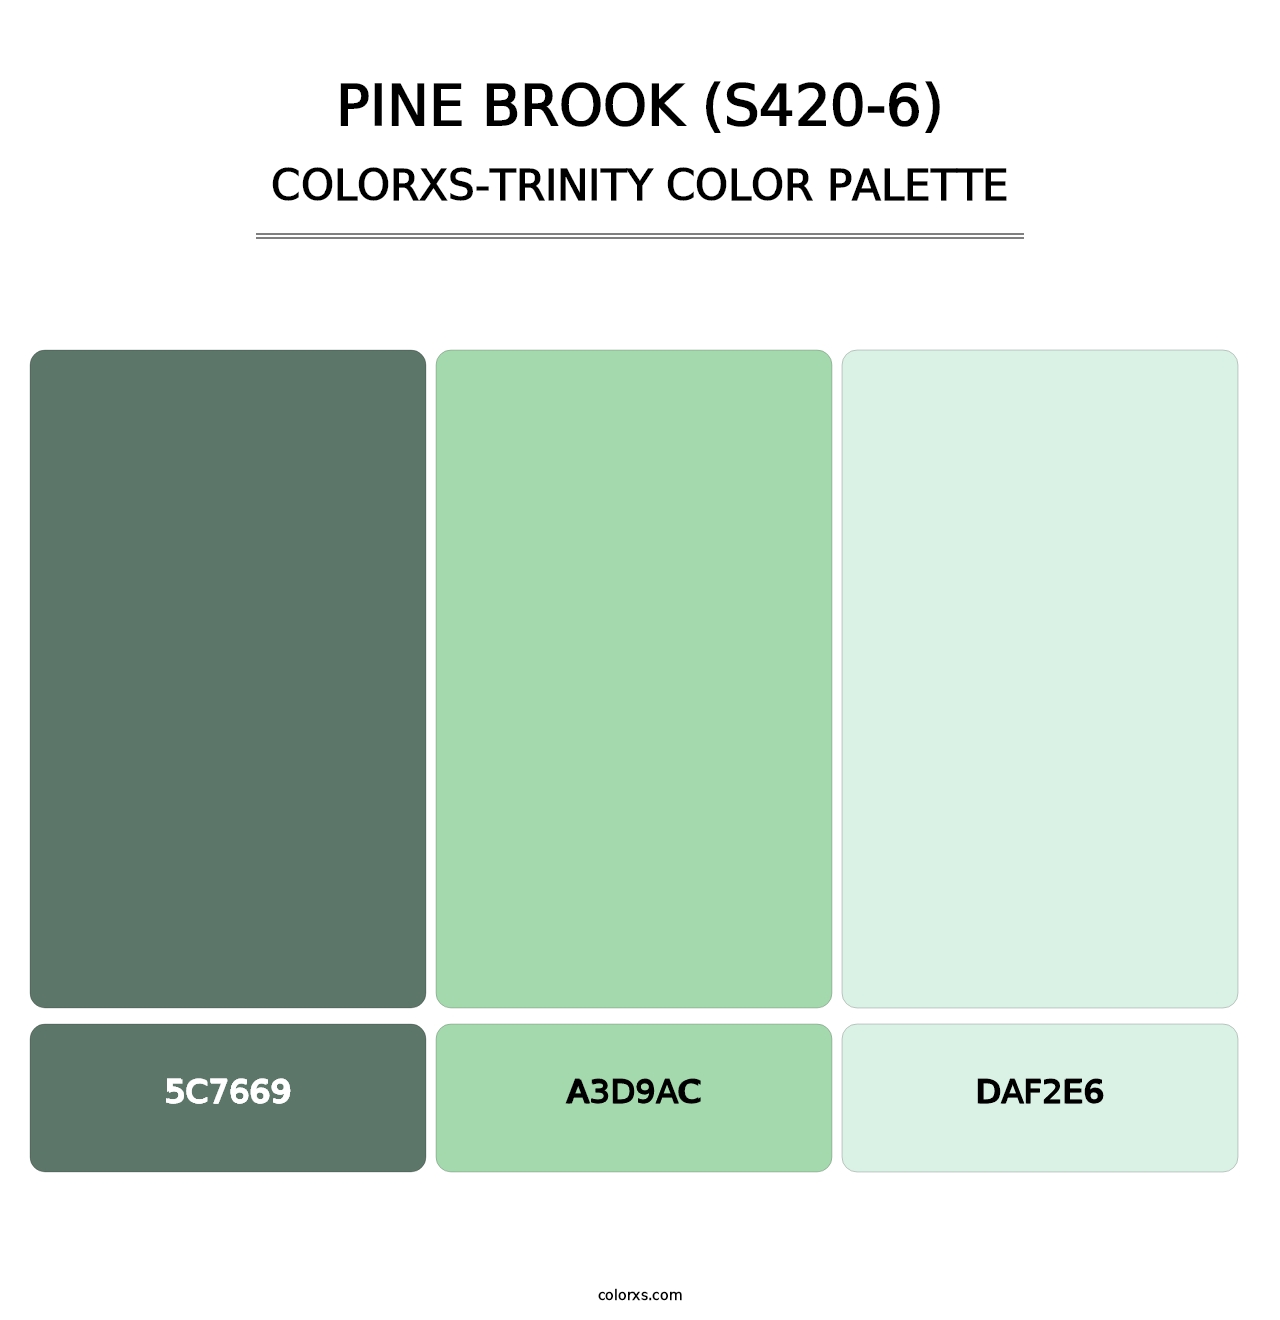 Pine Brook (S420-6) - Colorxs Trinity Palette